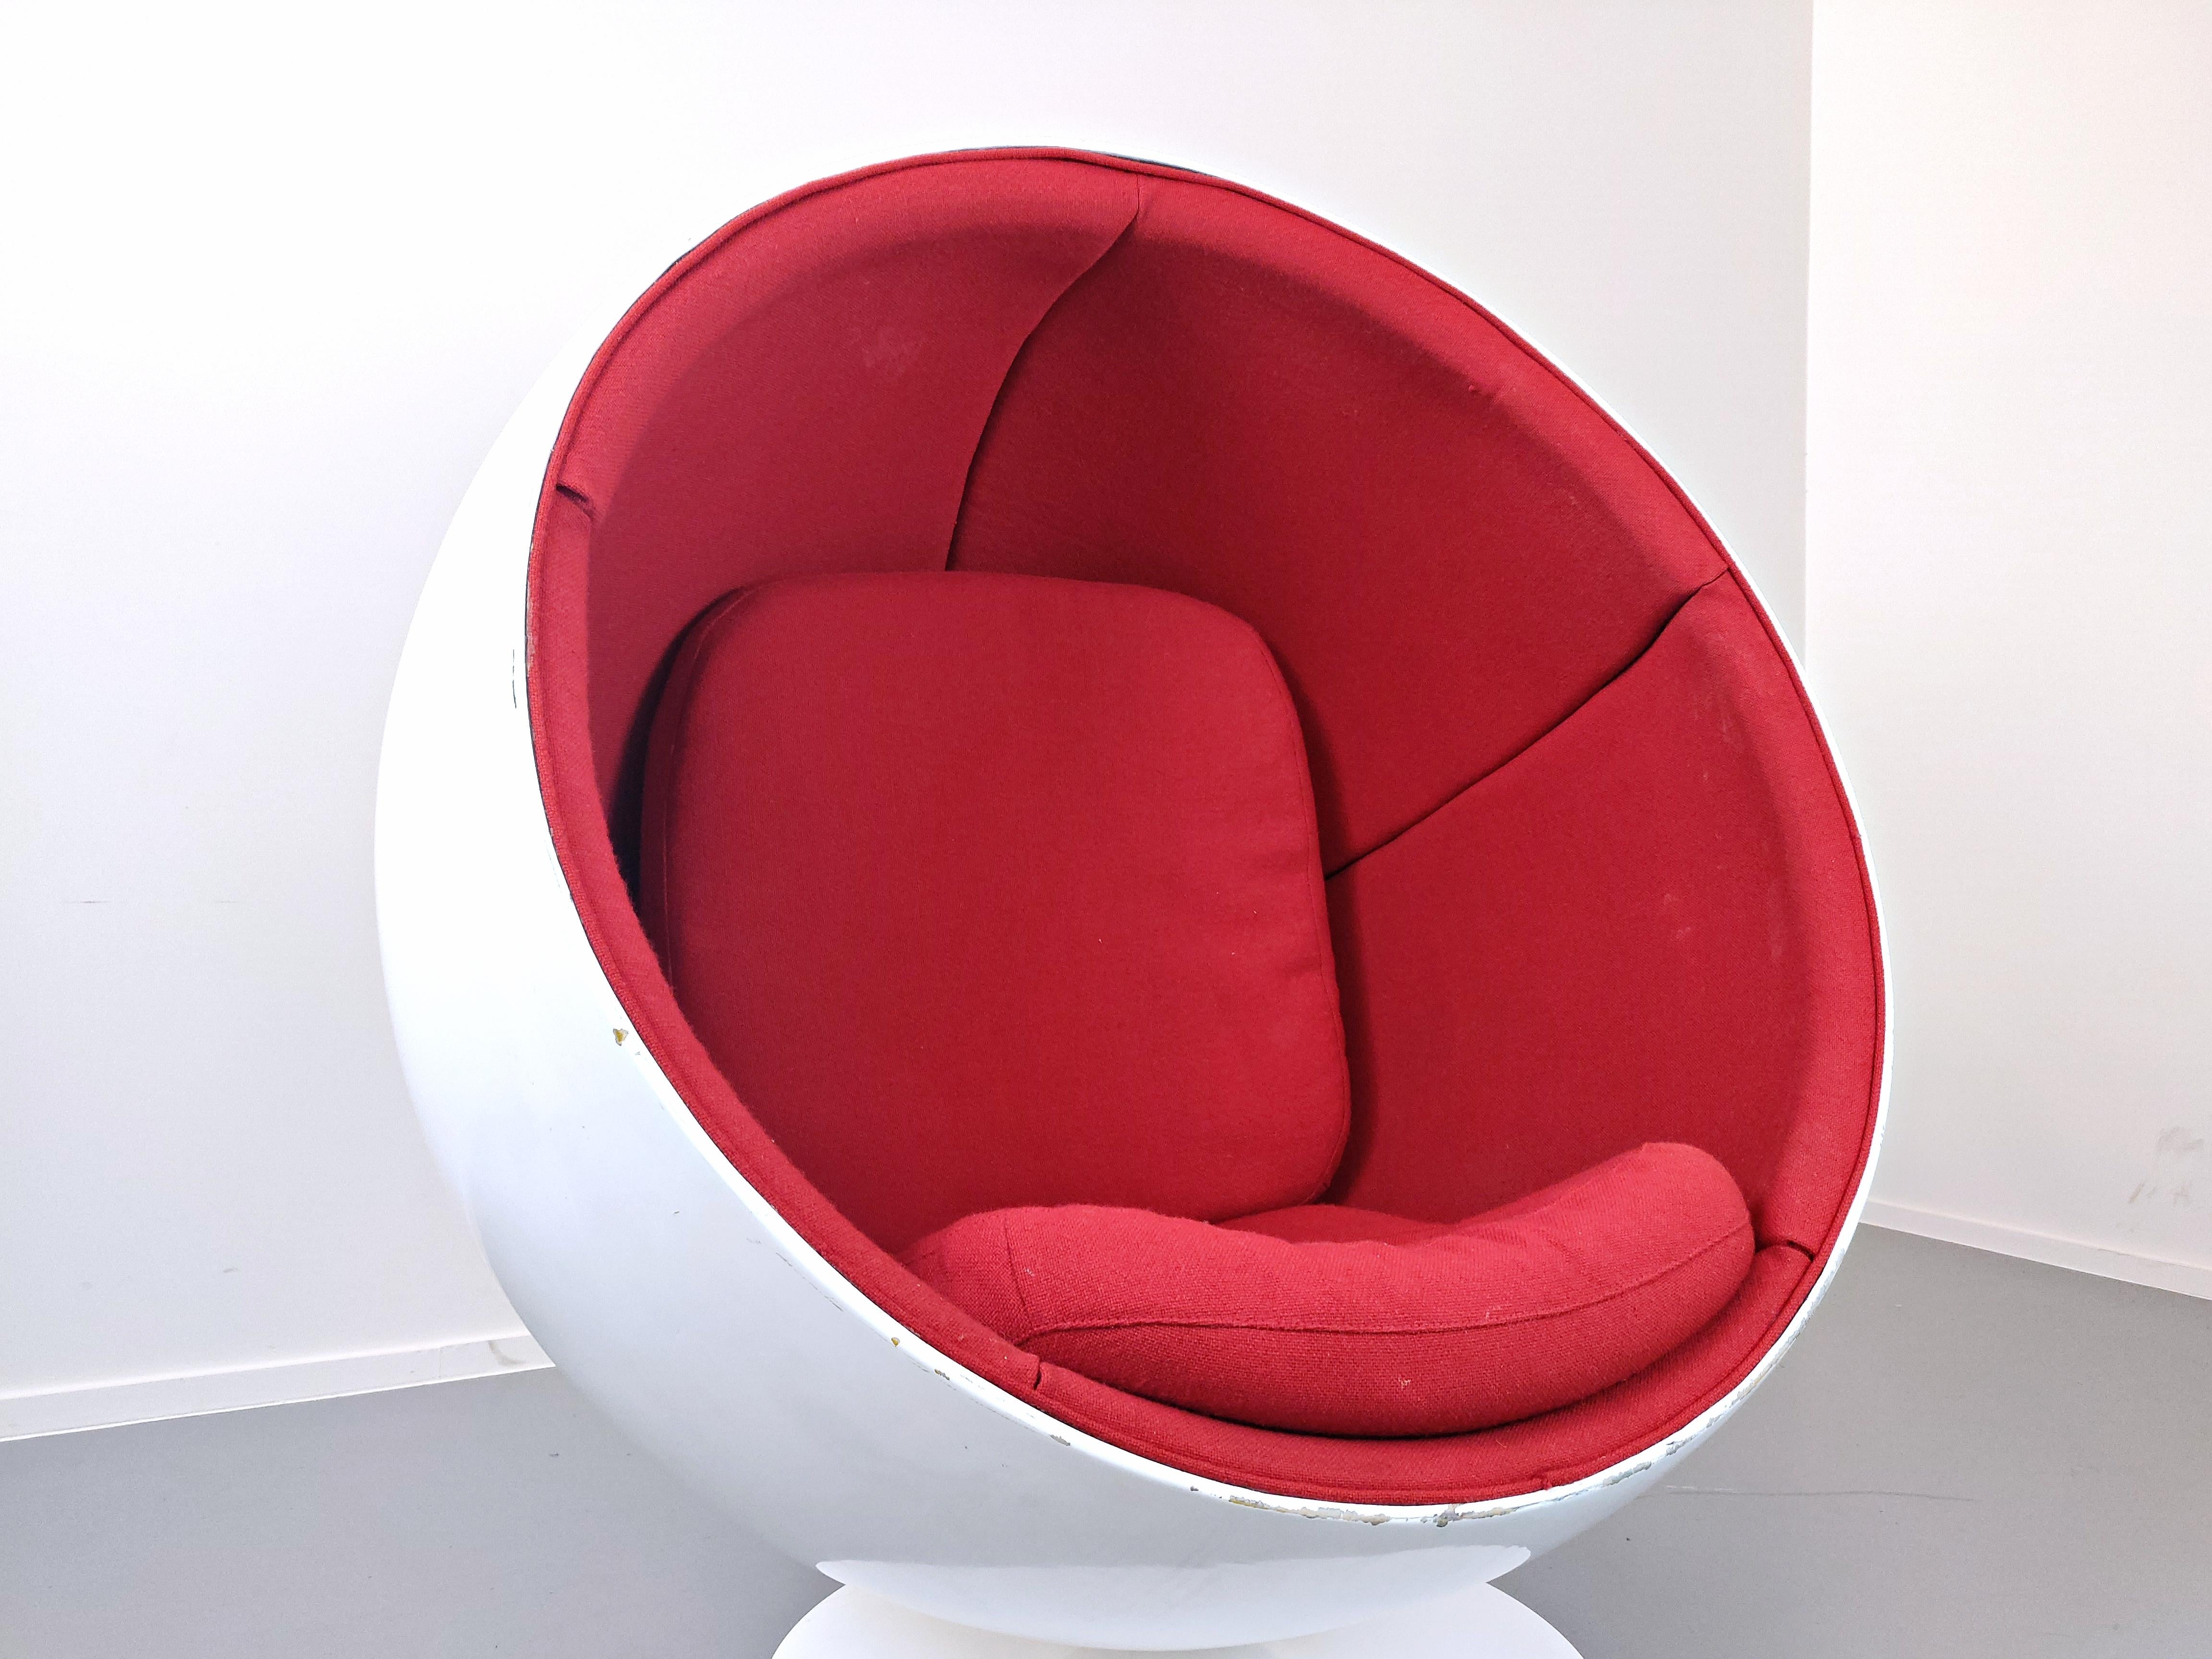 Swivel ball chair attributed to Eero Aarnio.